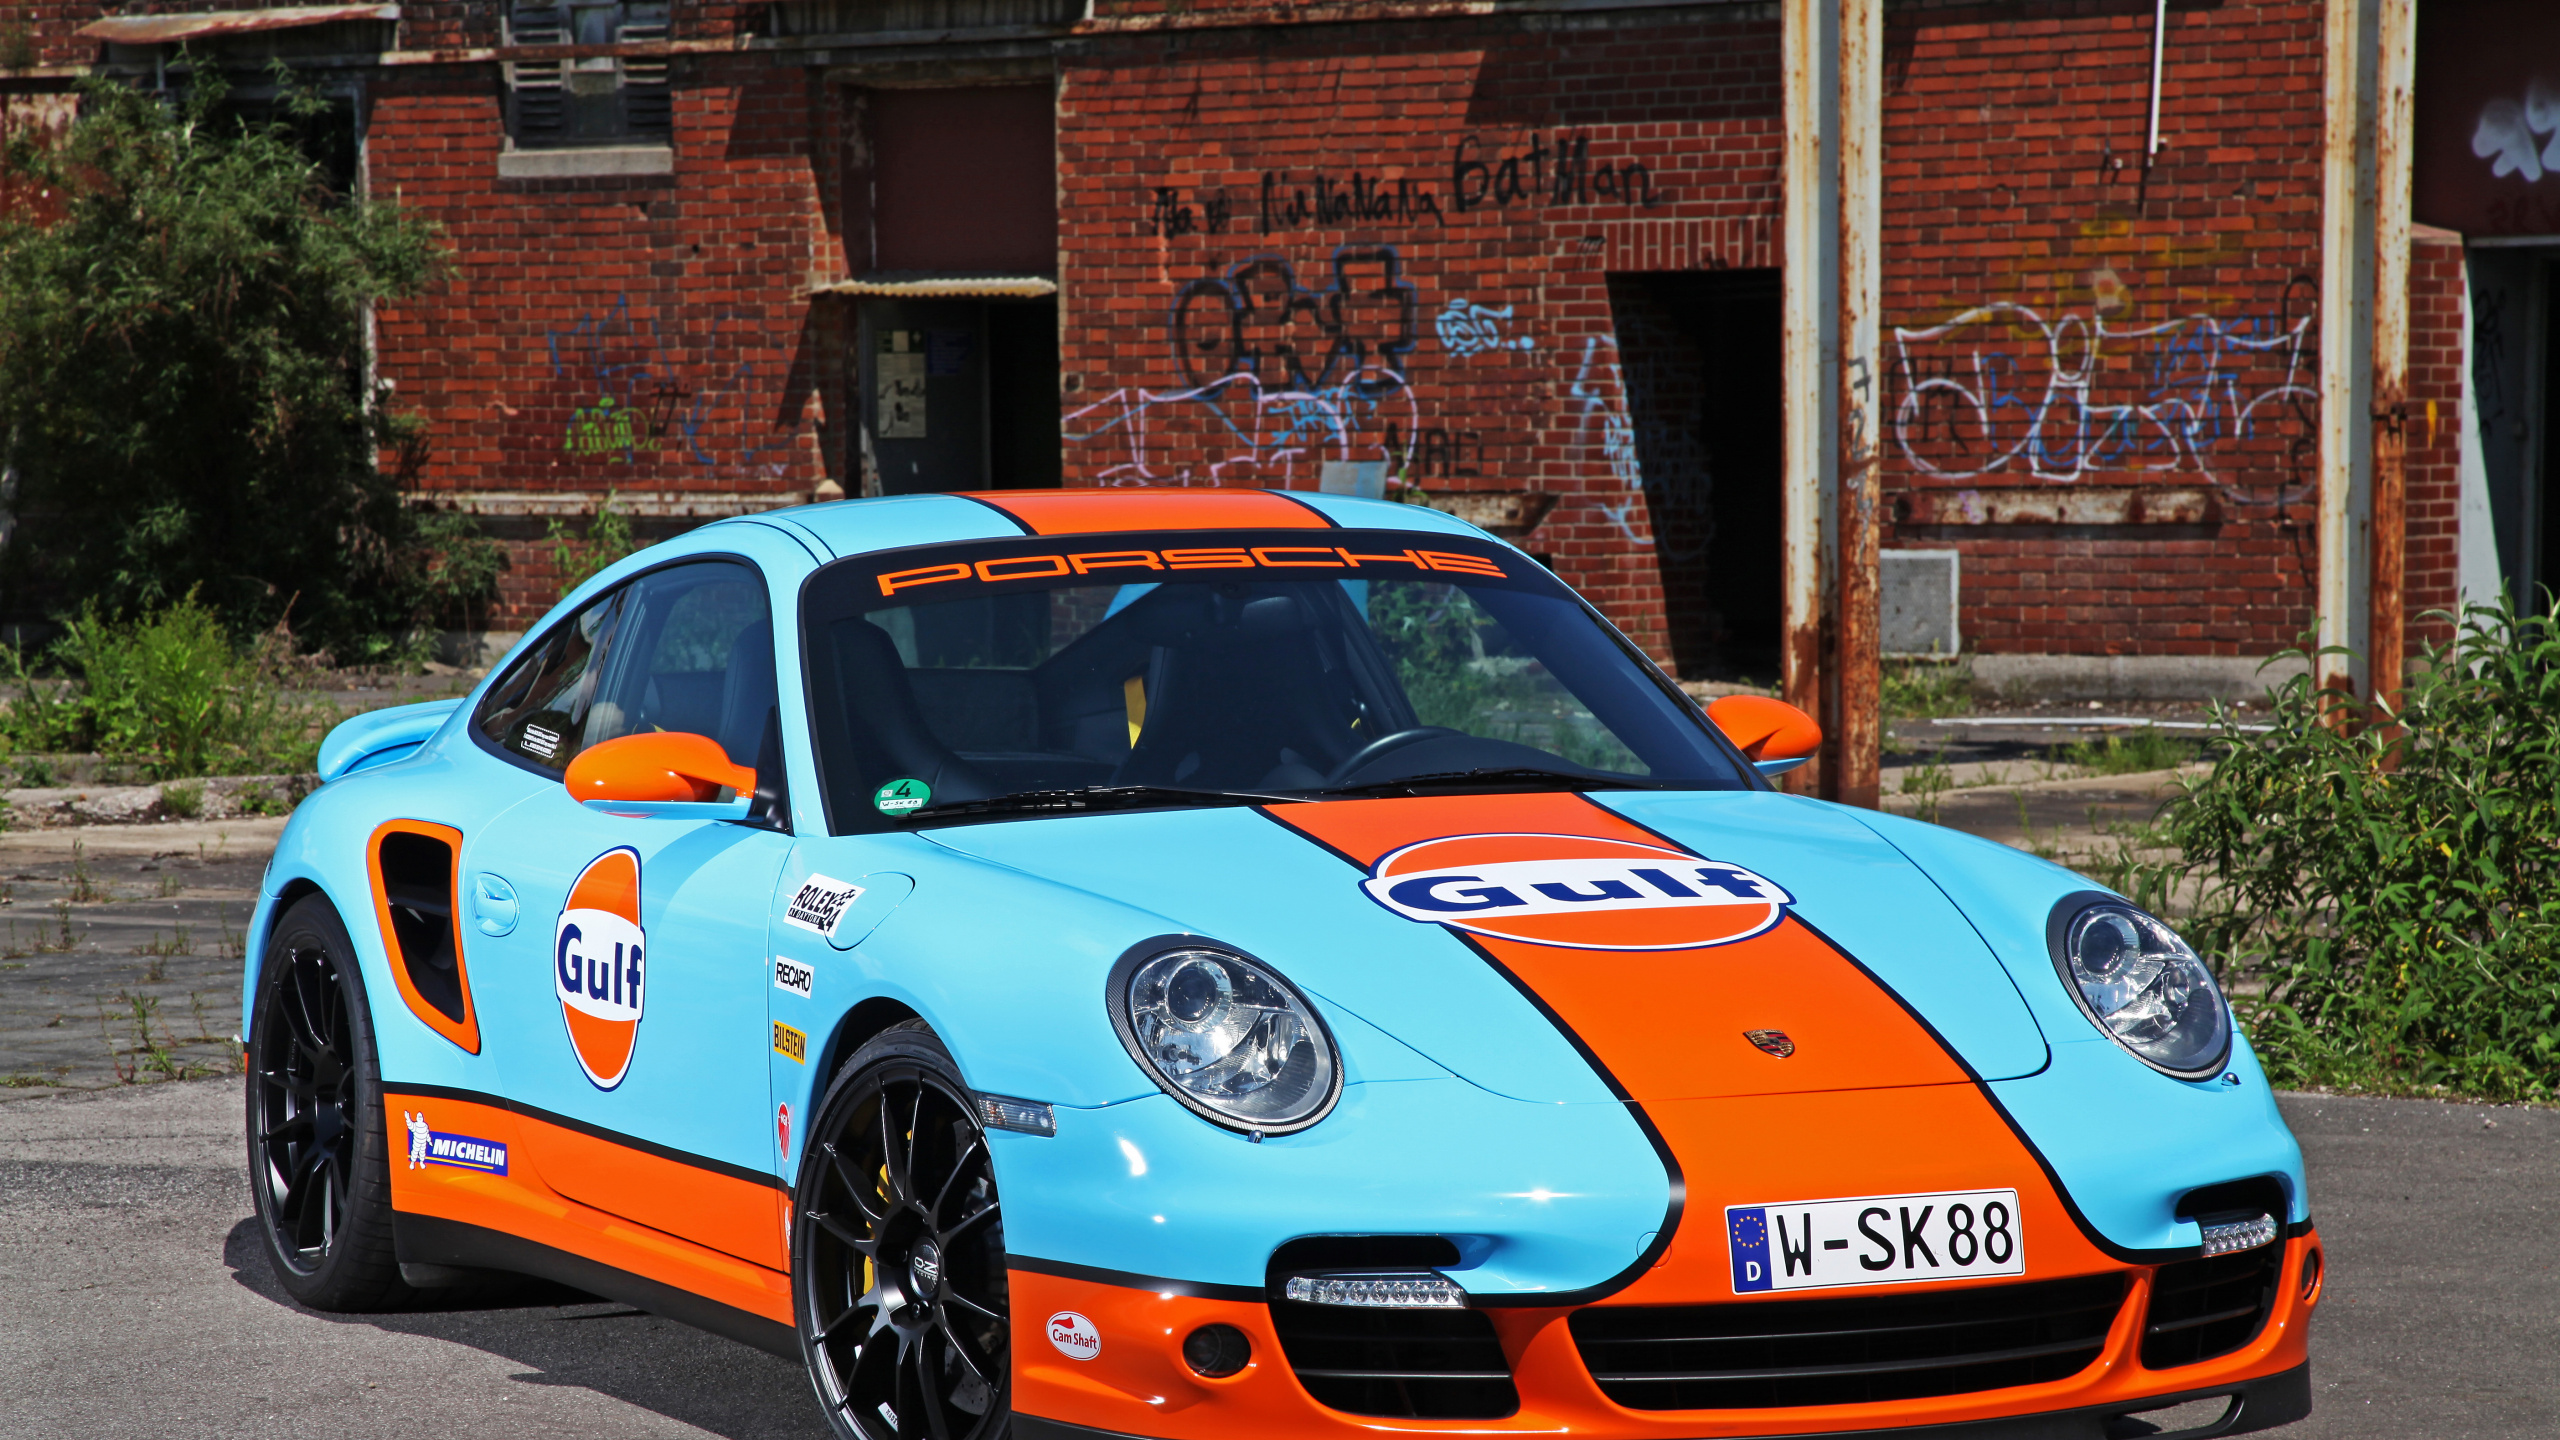 Blue and White Porsche 911 Parked Near Brown Brick Building During Daytime. Wallpaper in 2560x1440 Resolution